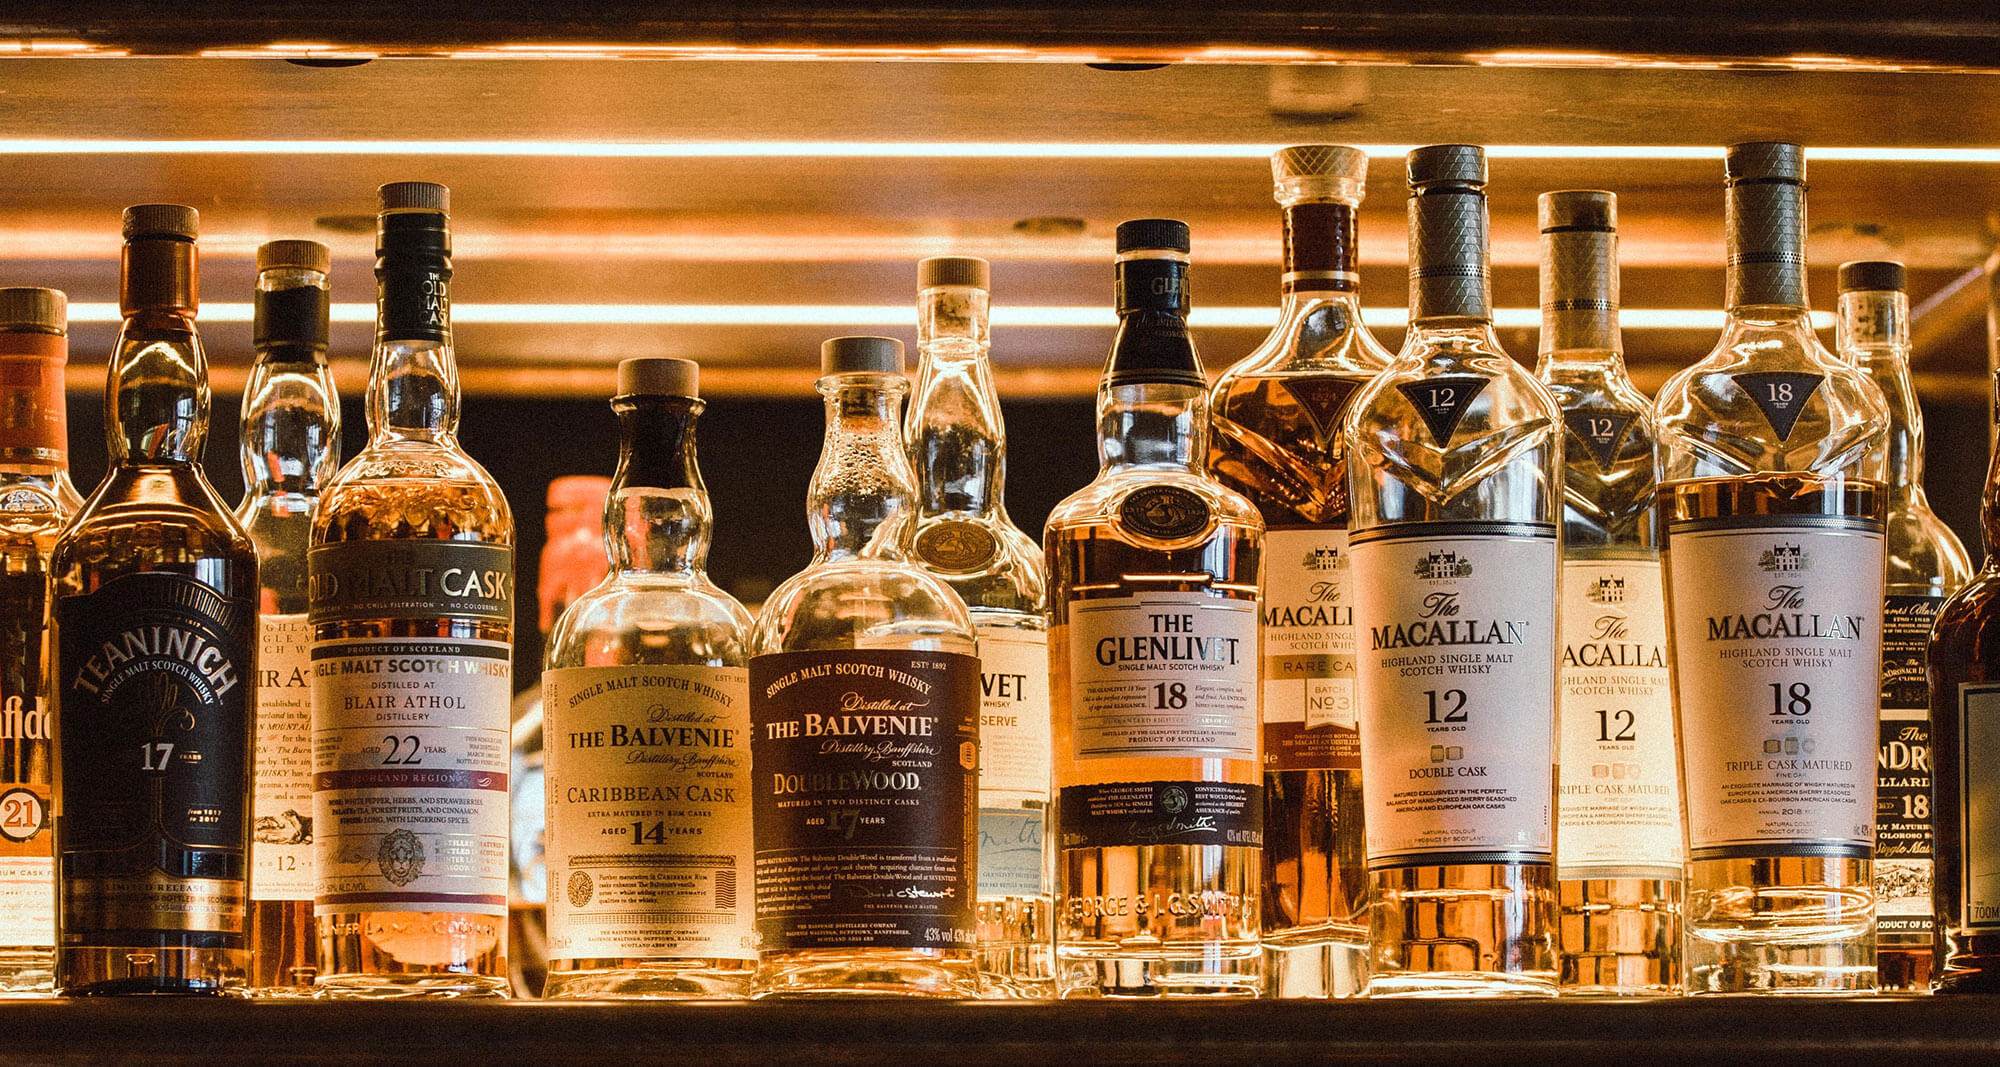 Whisky bottles on a shelf